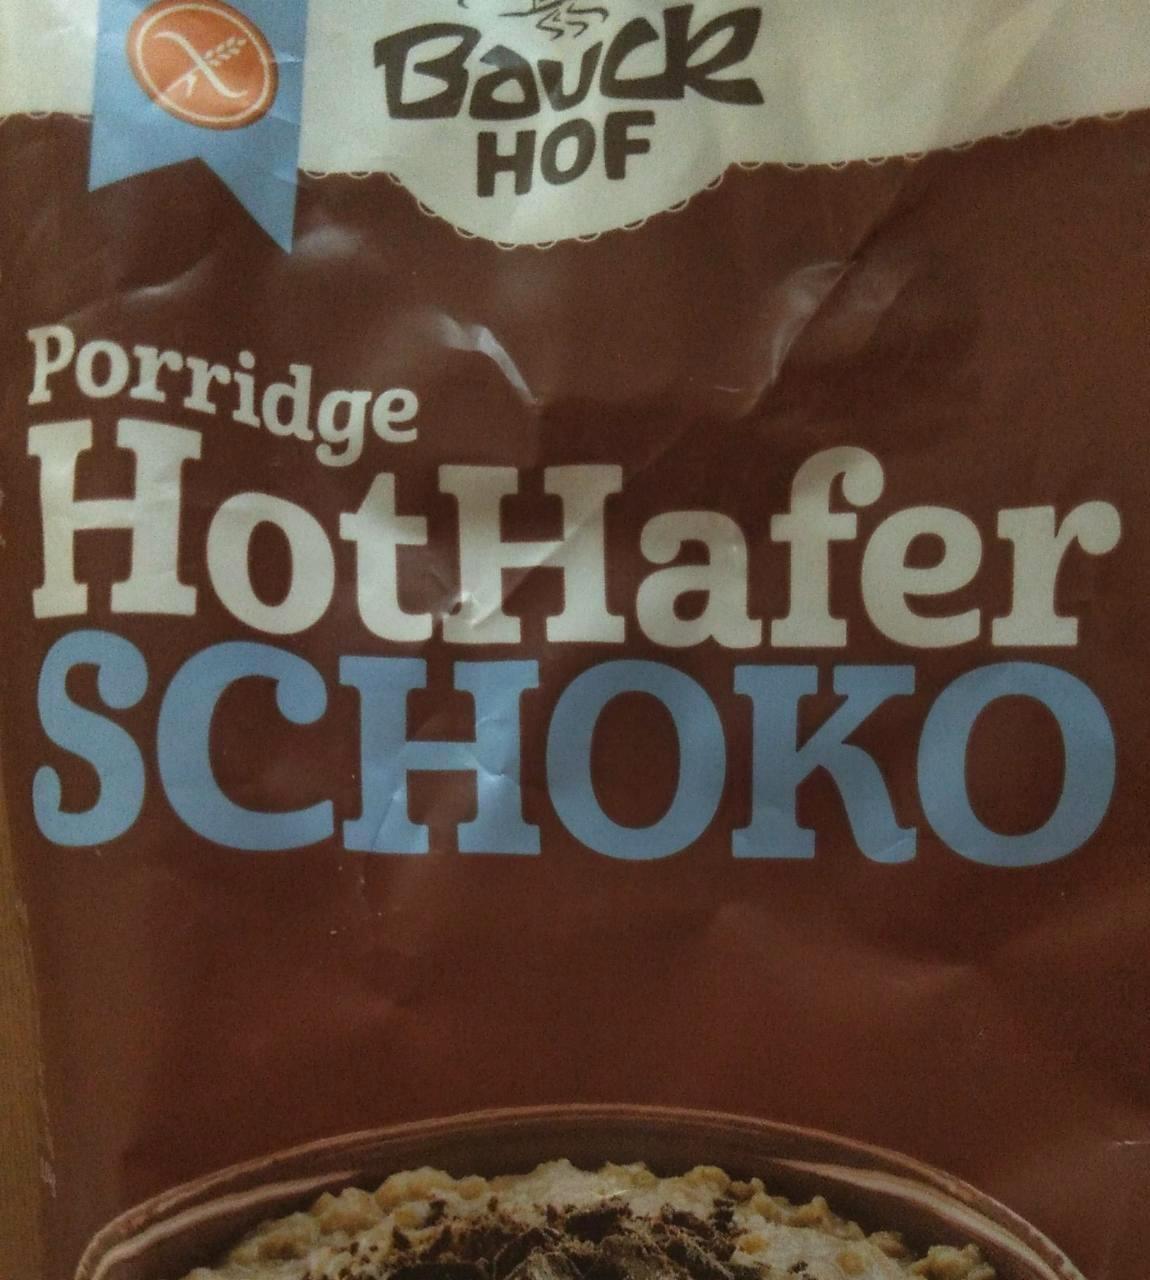 Képek - Porridge hot hafer schoko Bauck hof